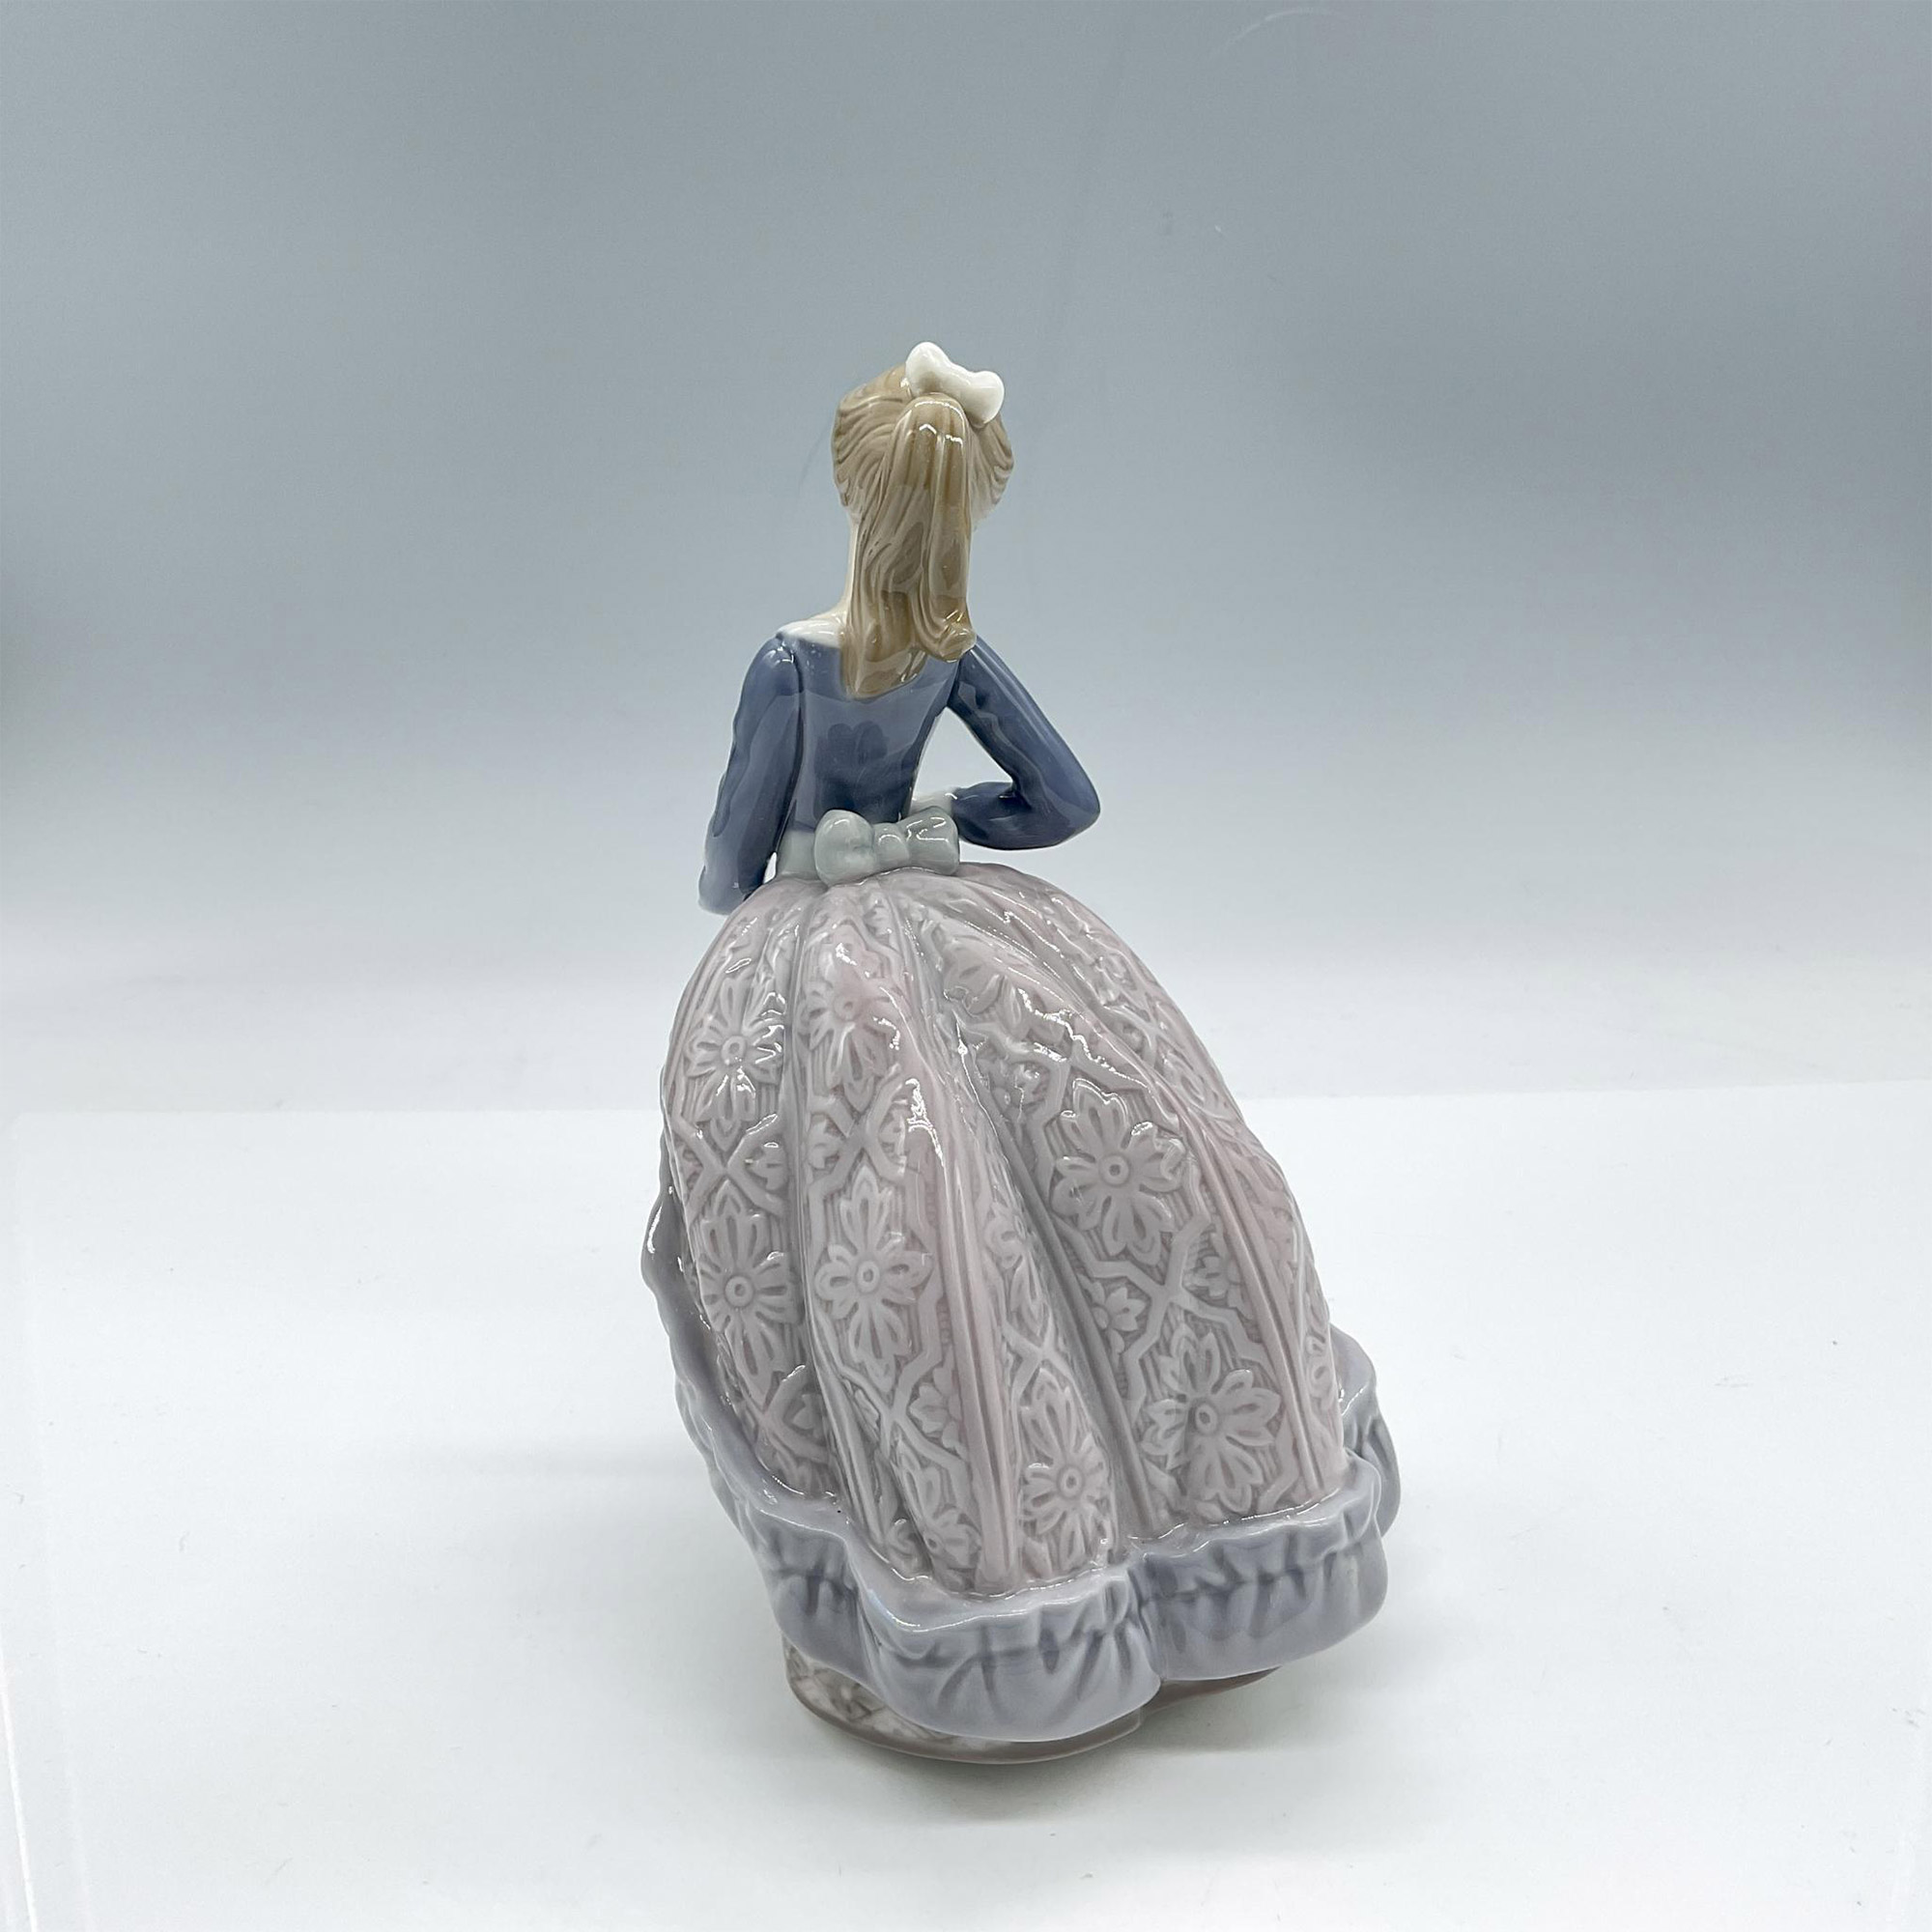 Evita 1005212 - Lladro Porcelain Figurine - Image 2 of 3